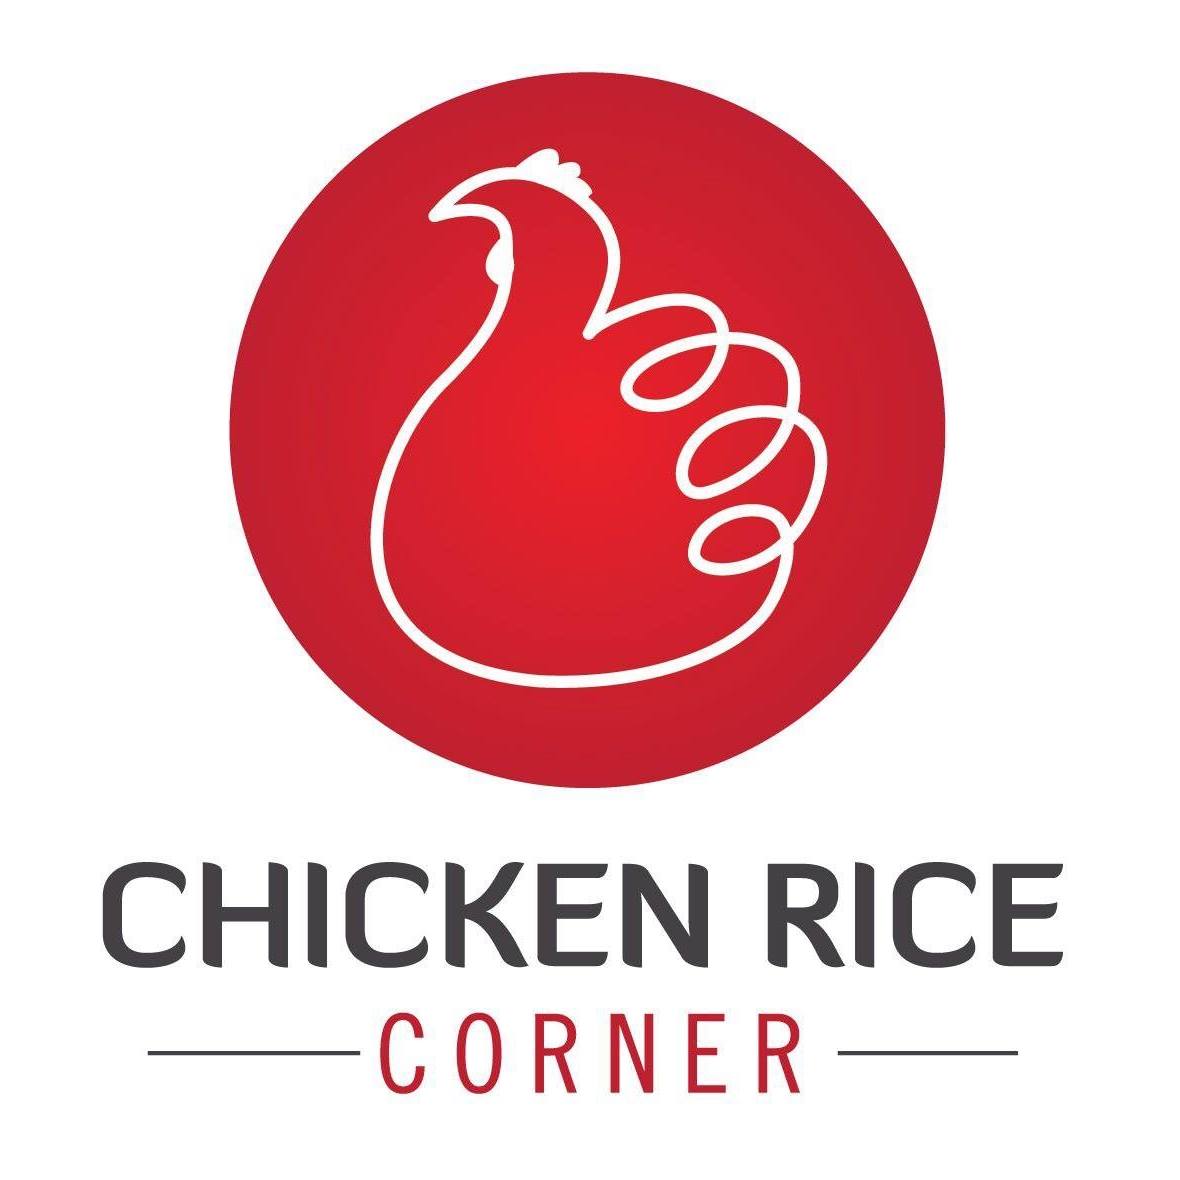 chicken rice corner logo april 22.jpg